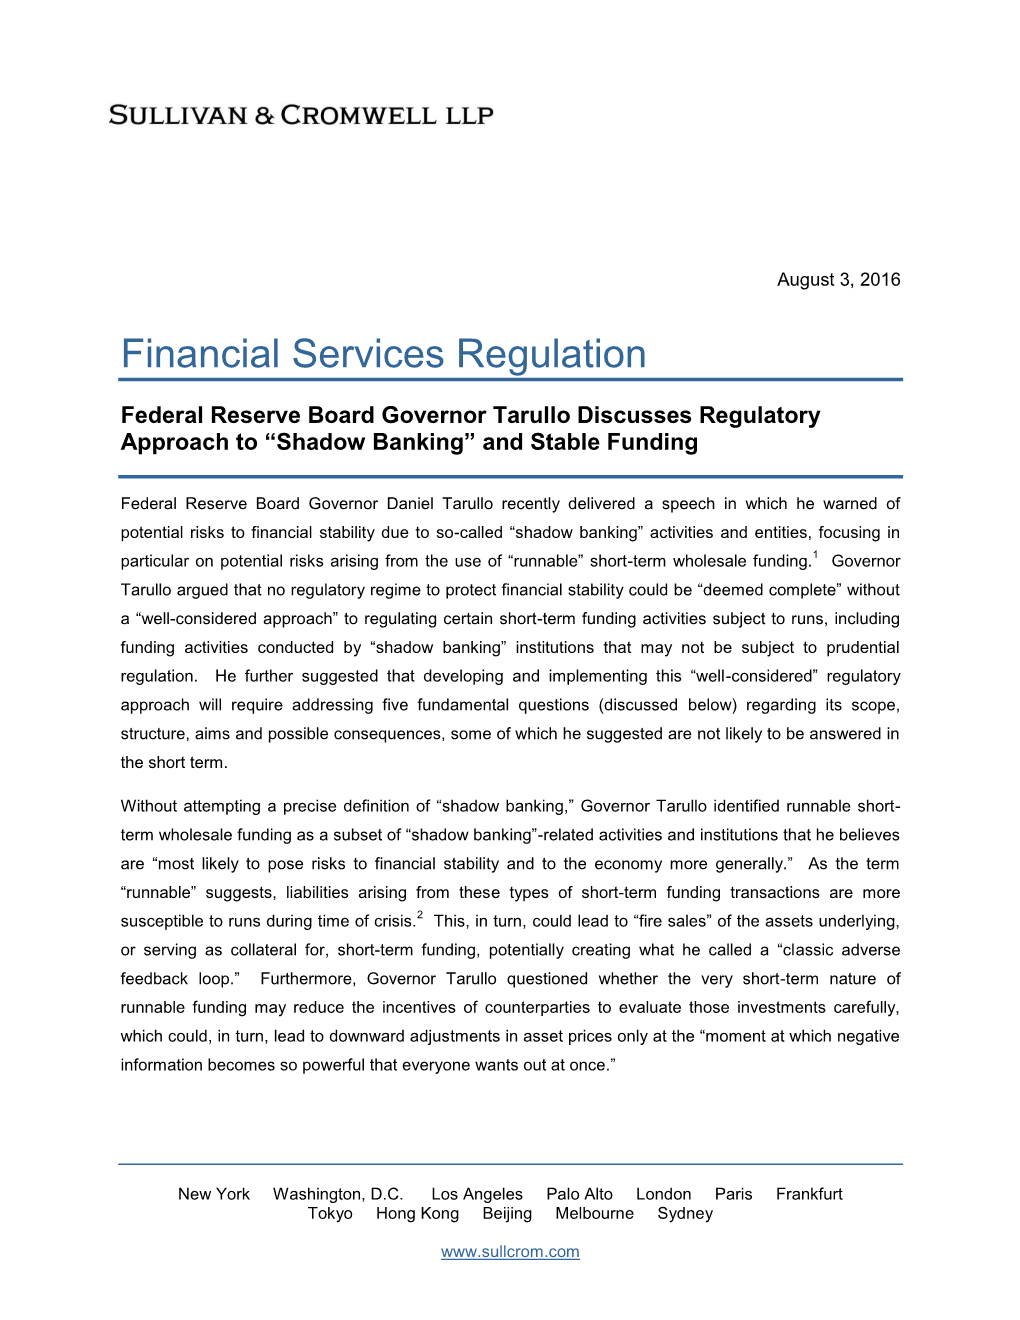 Financial Services Regulation